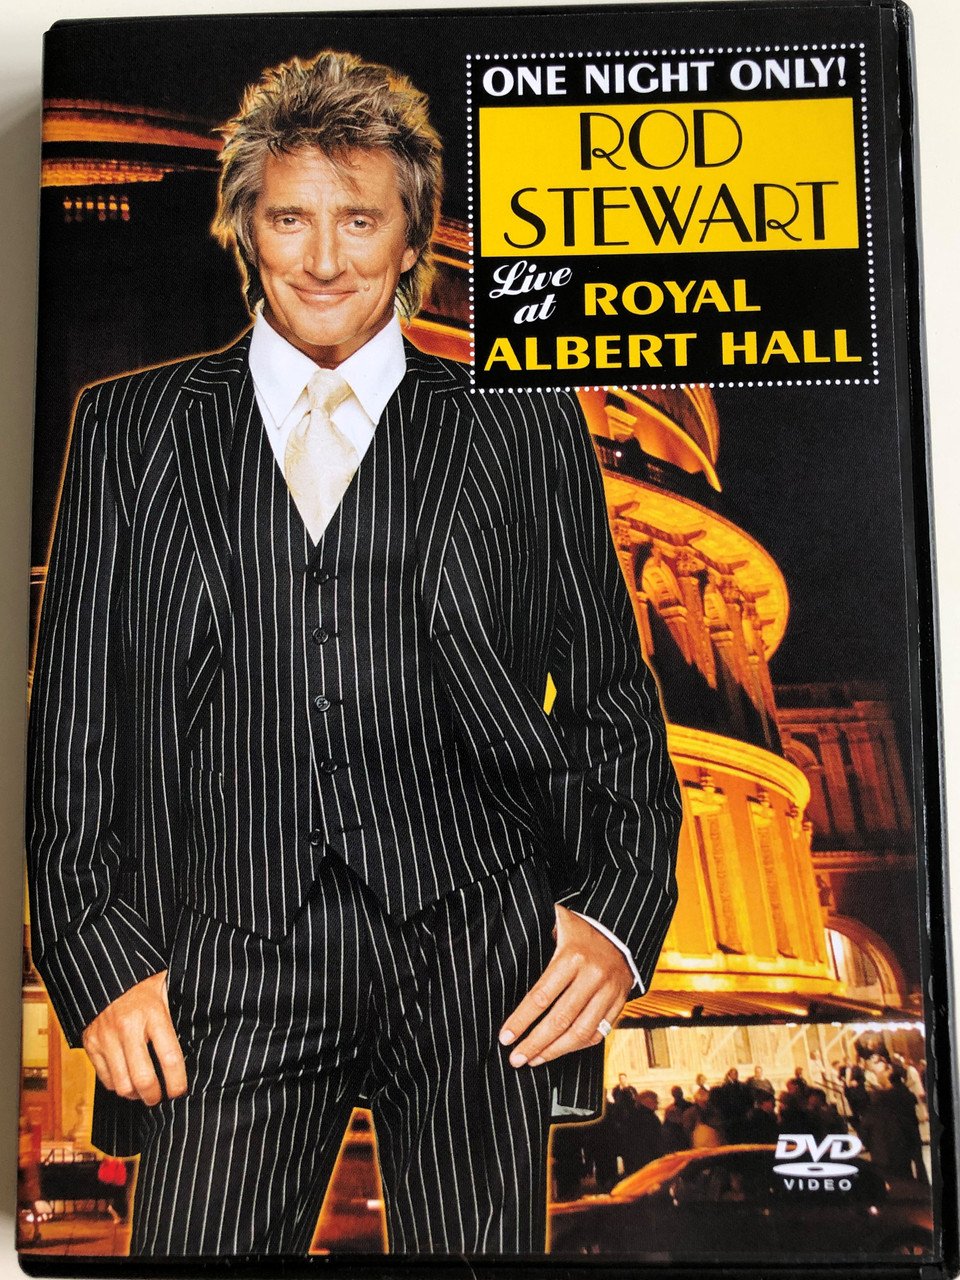 Rod Stewart - Live at Royal Albert Hall DVD 2004 / One Night only! / BMG -  BBC - bibleinmylanguage